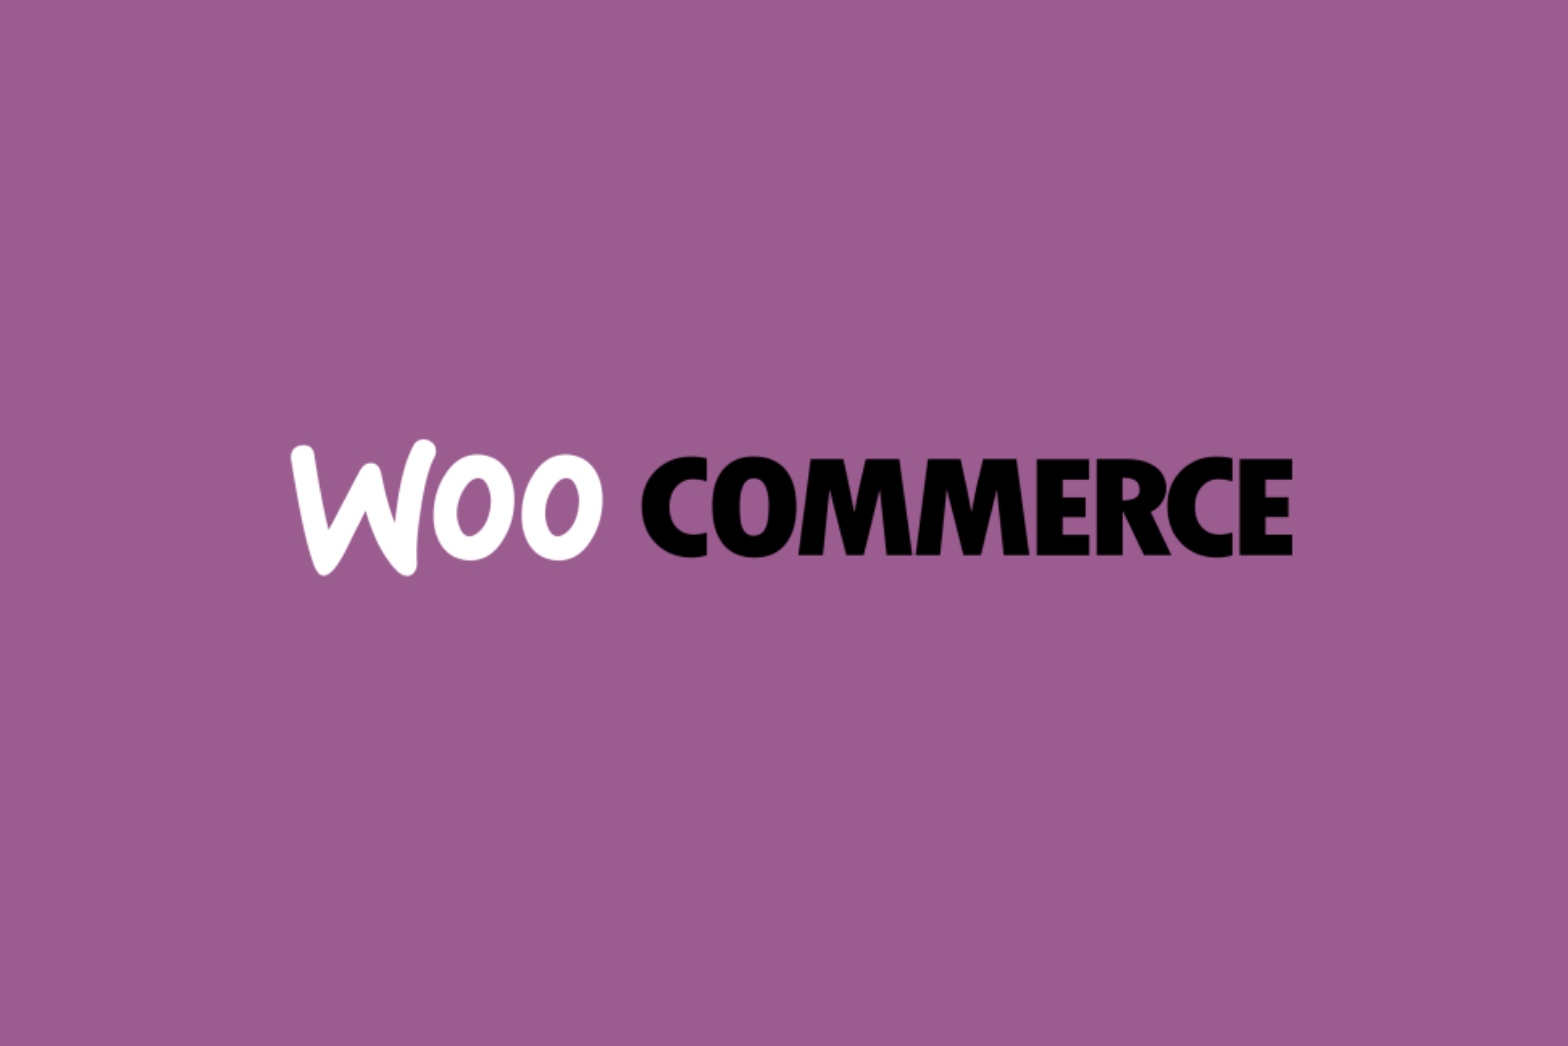 Woo commerce Development Company in Kochi, Kerala